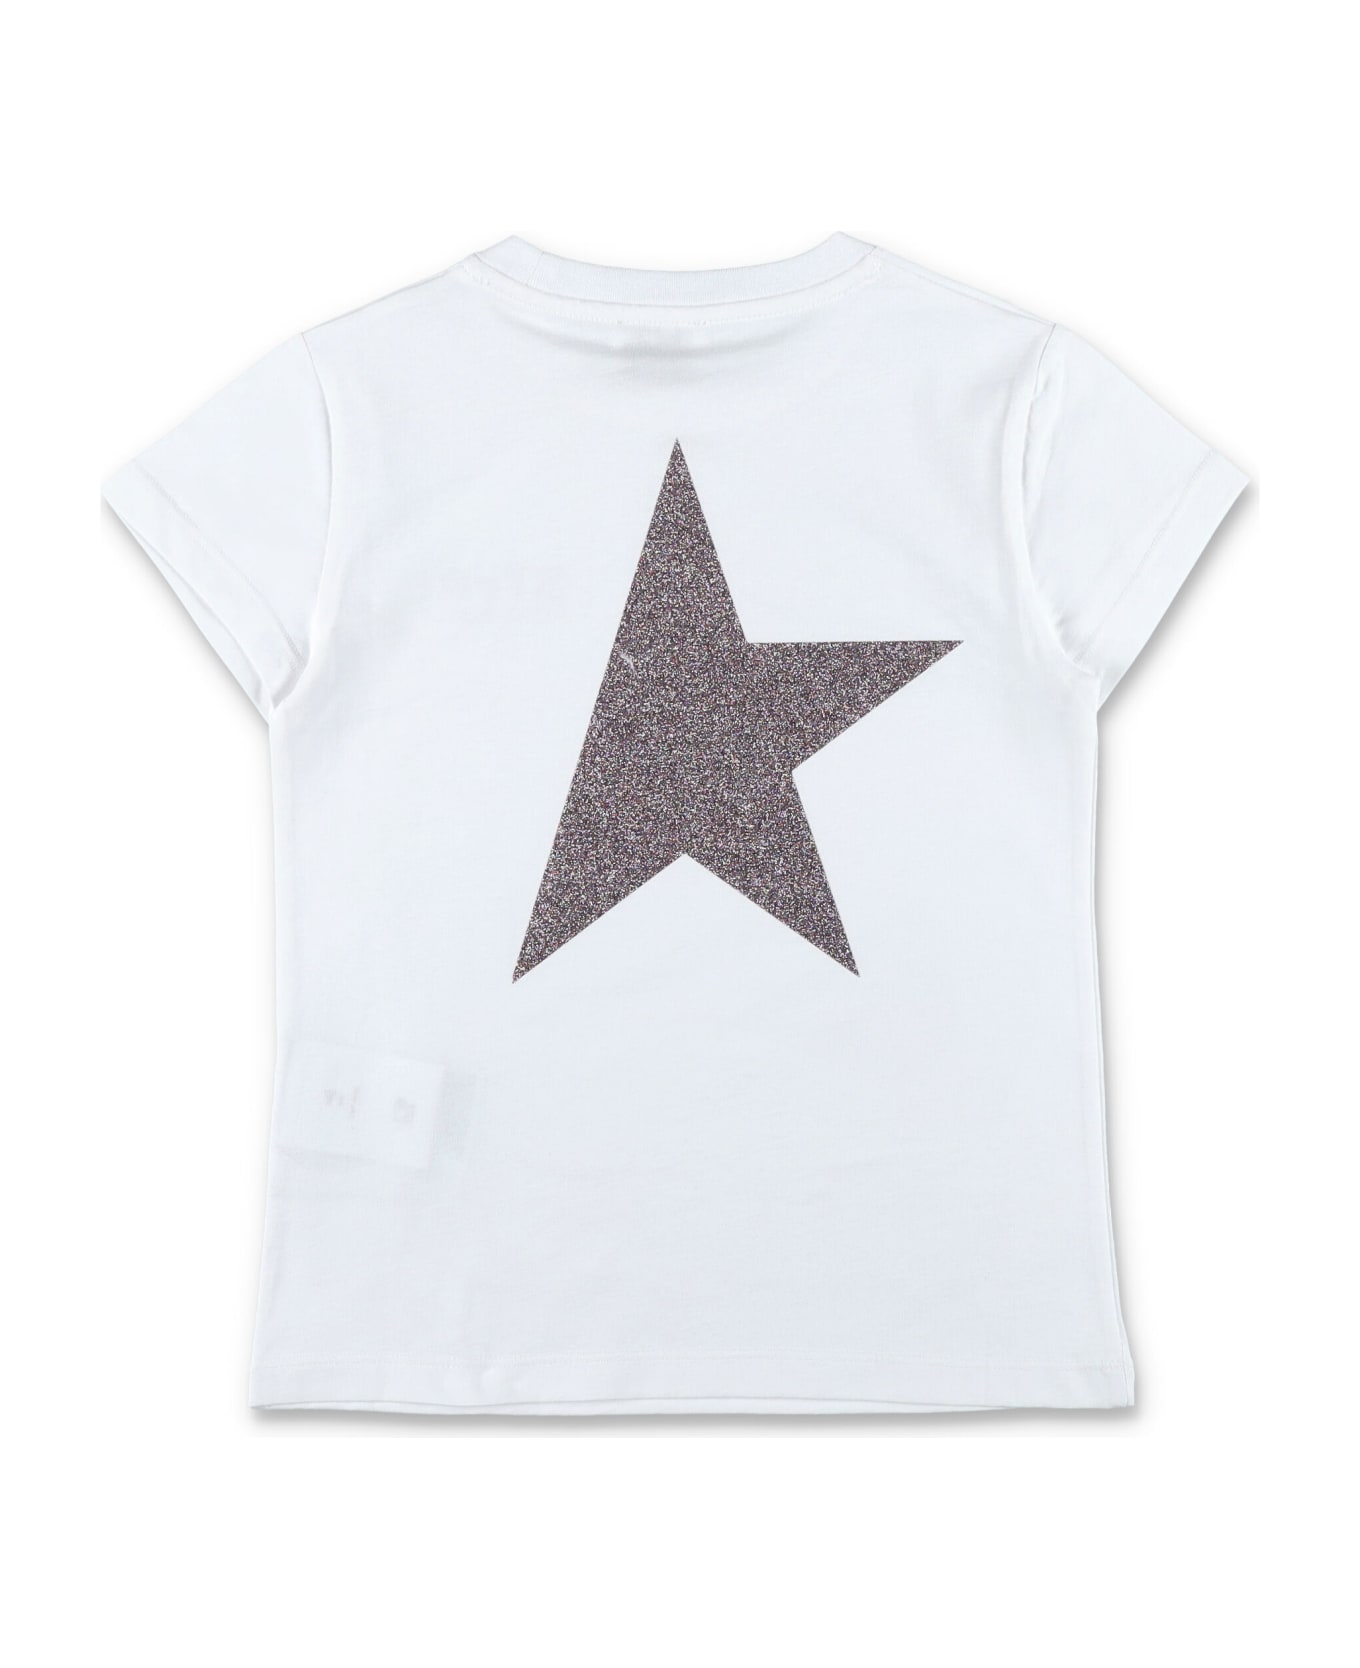 Golden Goose T-shirt Star - WHITE/PINK